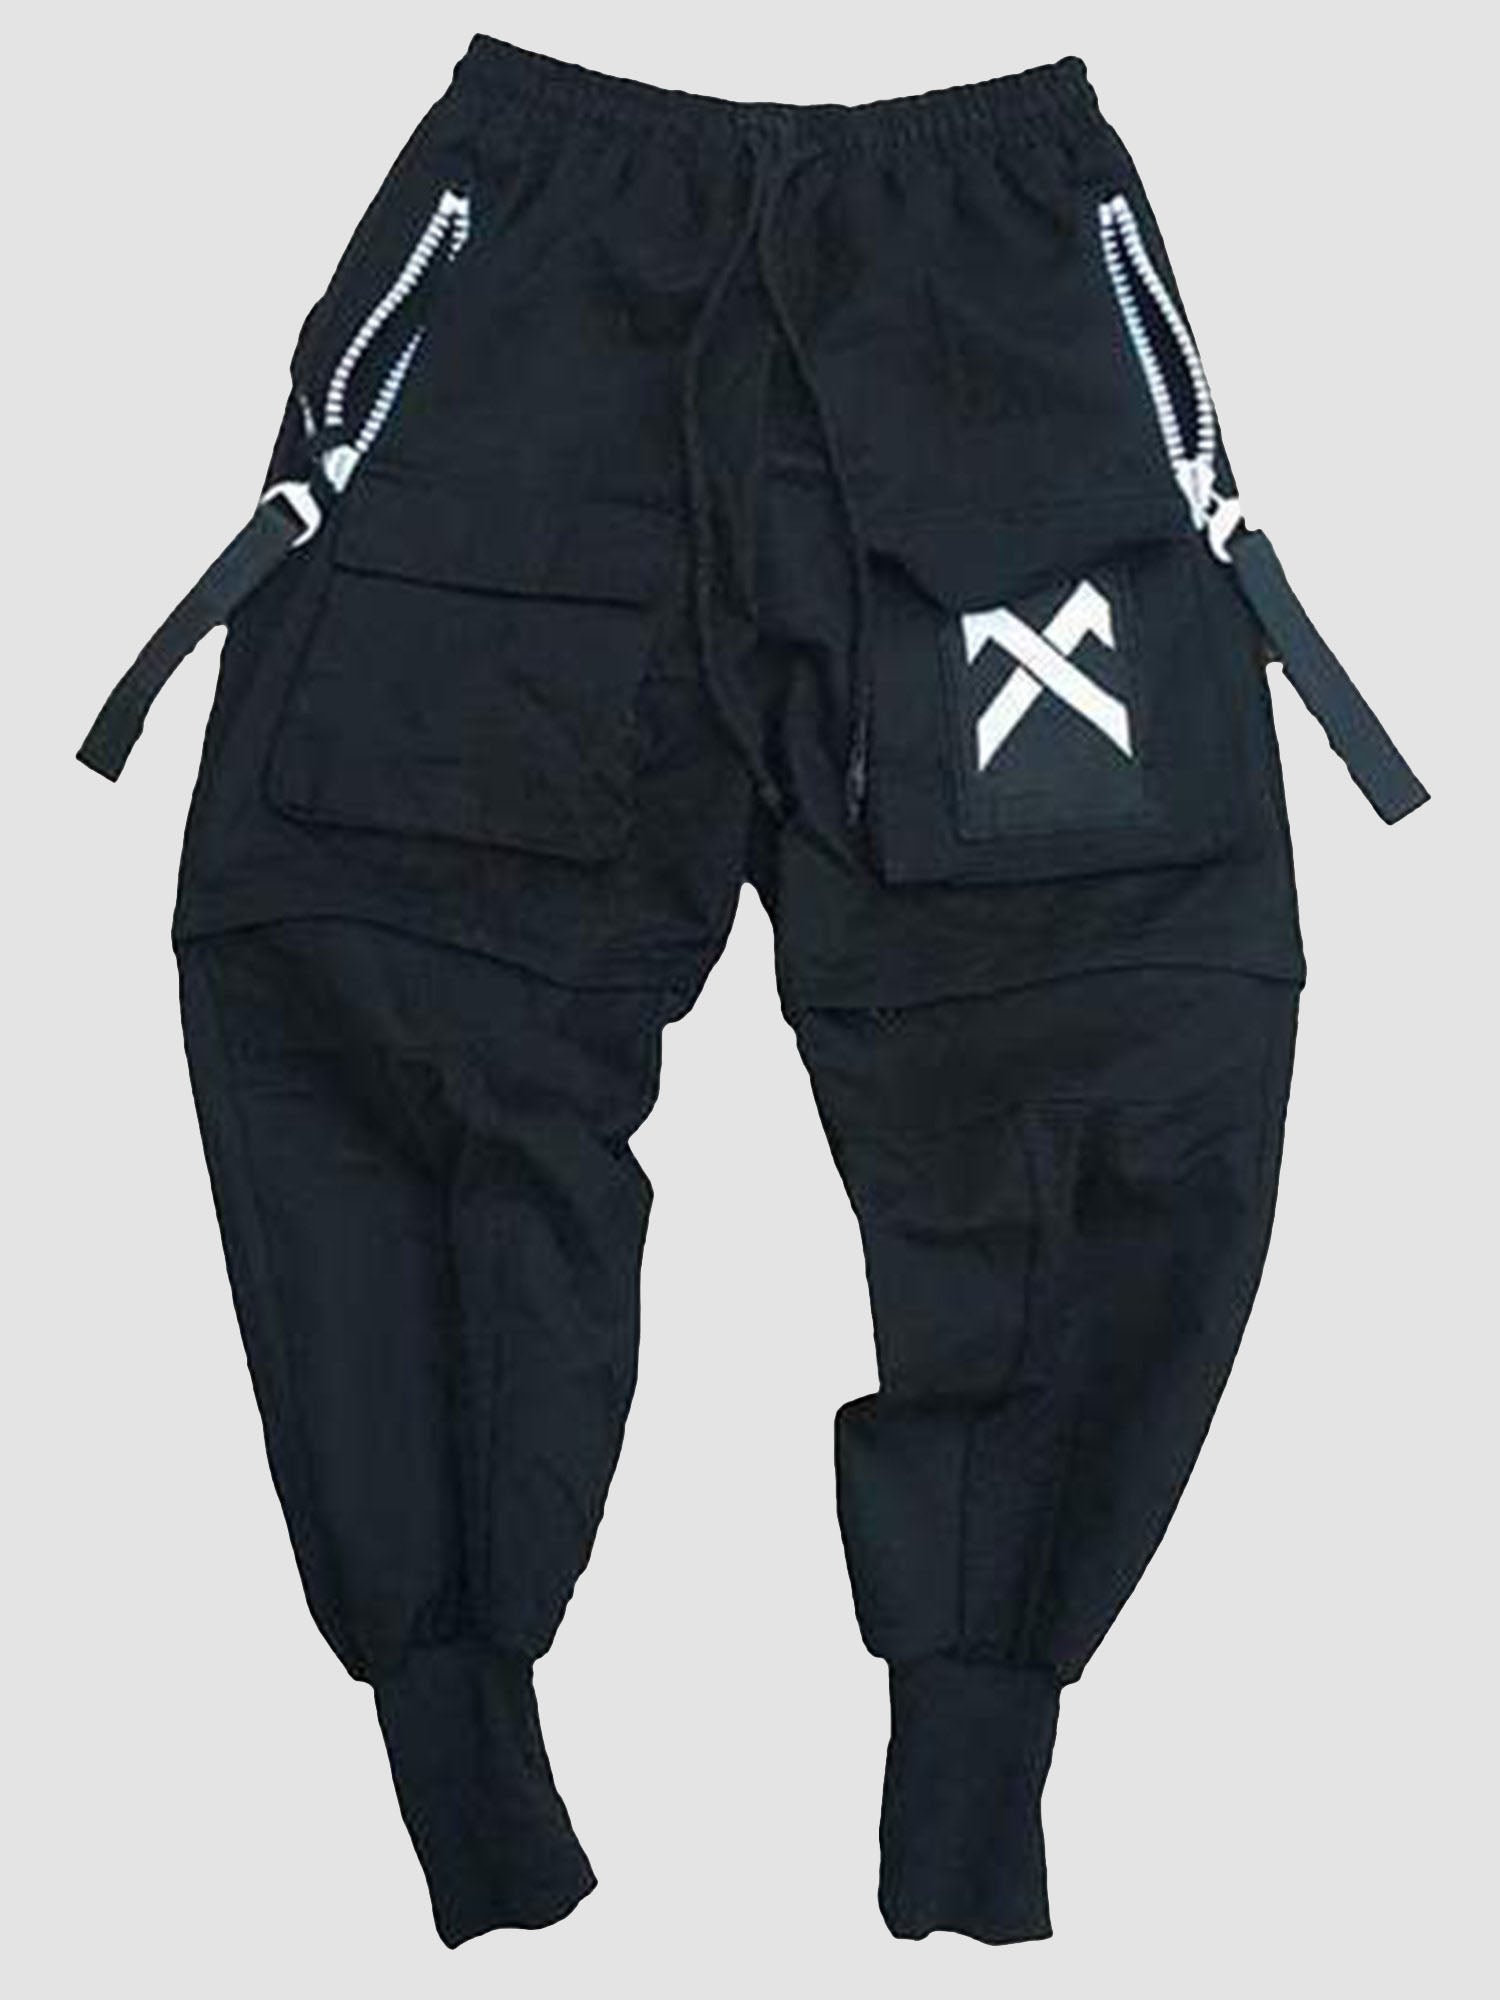 JUSTNOTAG Techwear X DARK Combat Pants